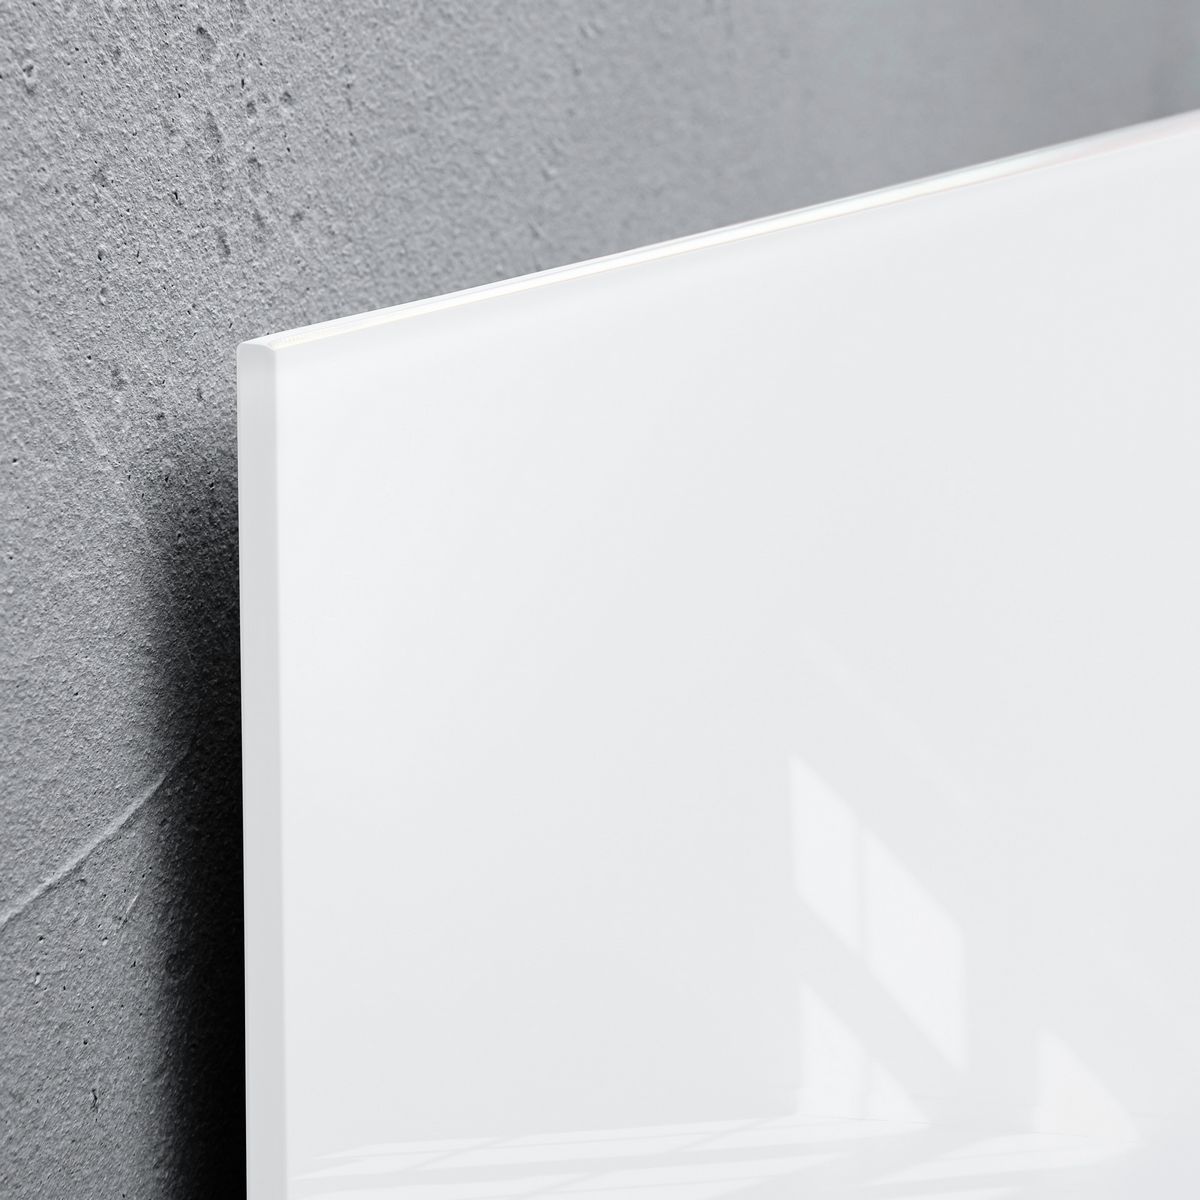 GL241 - Sigel - Magnetic Glass Boards - Super White - 130 x 55 cm